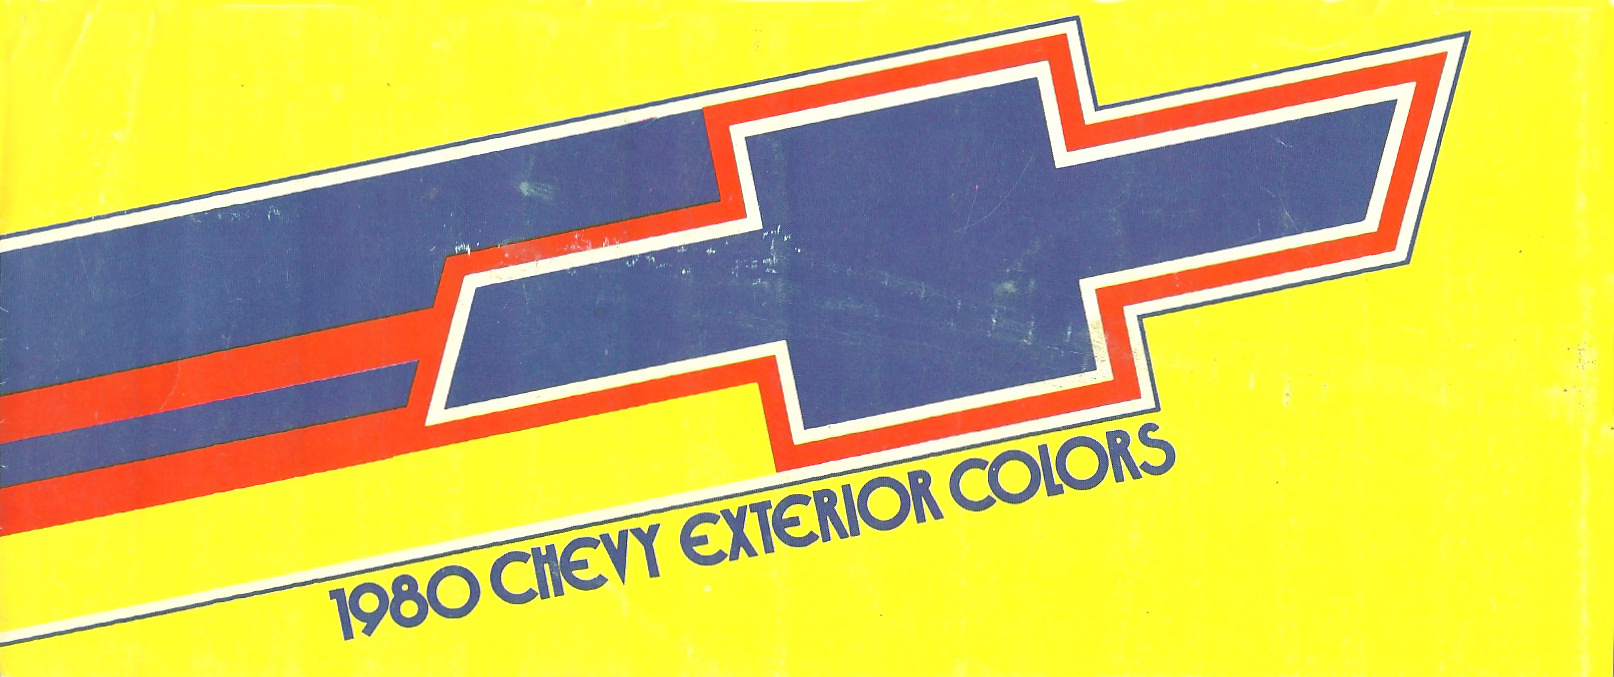 1980_Chevrolet_Exterior_Colors-01